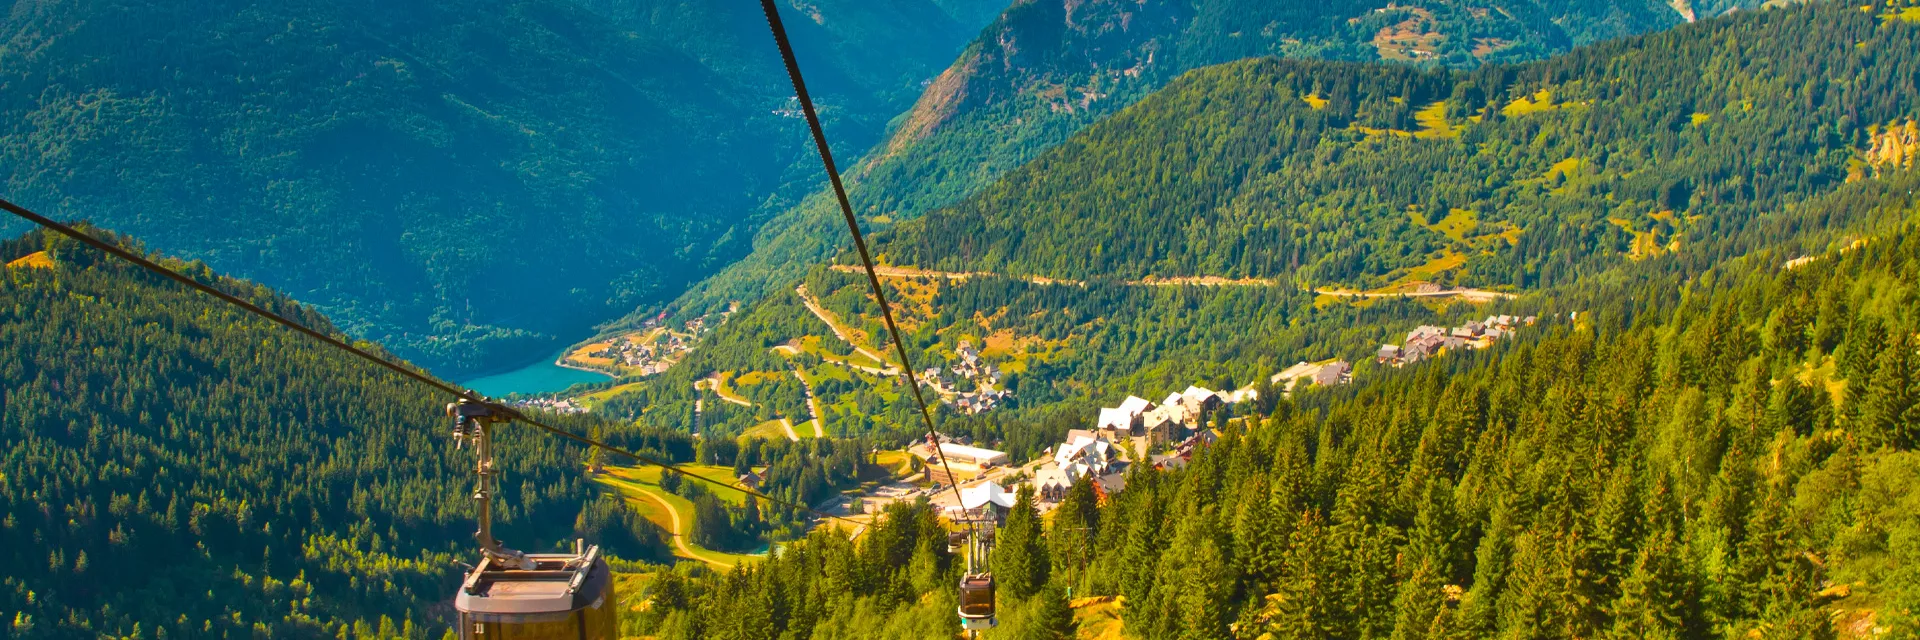 Holiday rental in Alpe d'Huez France